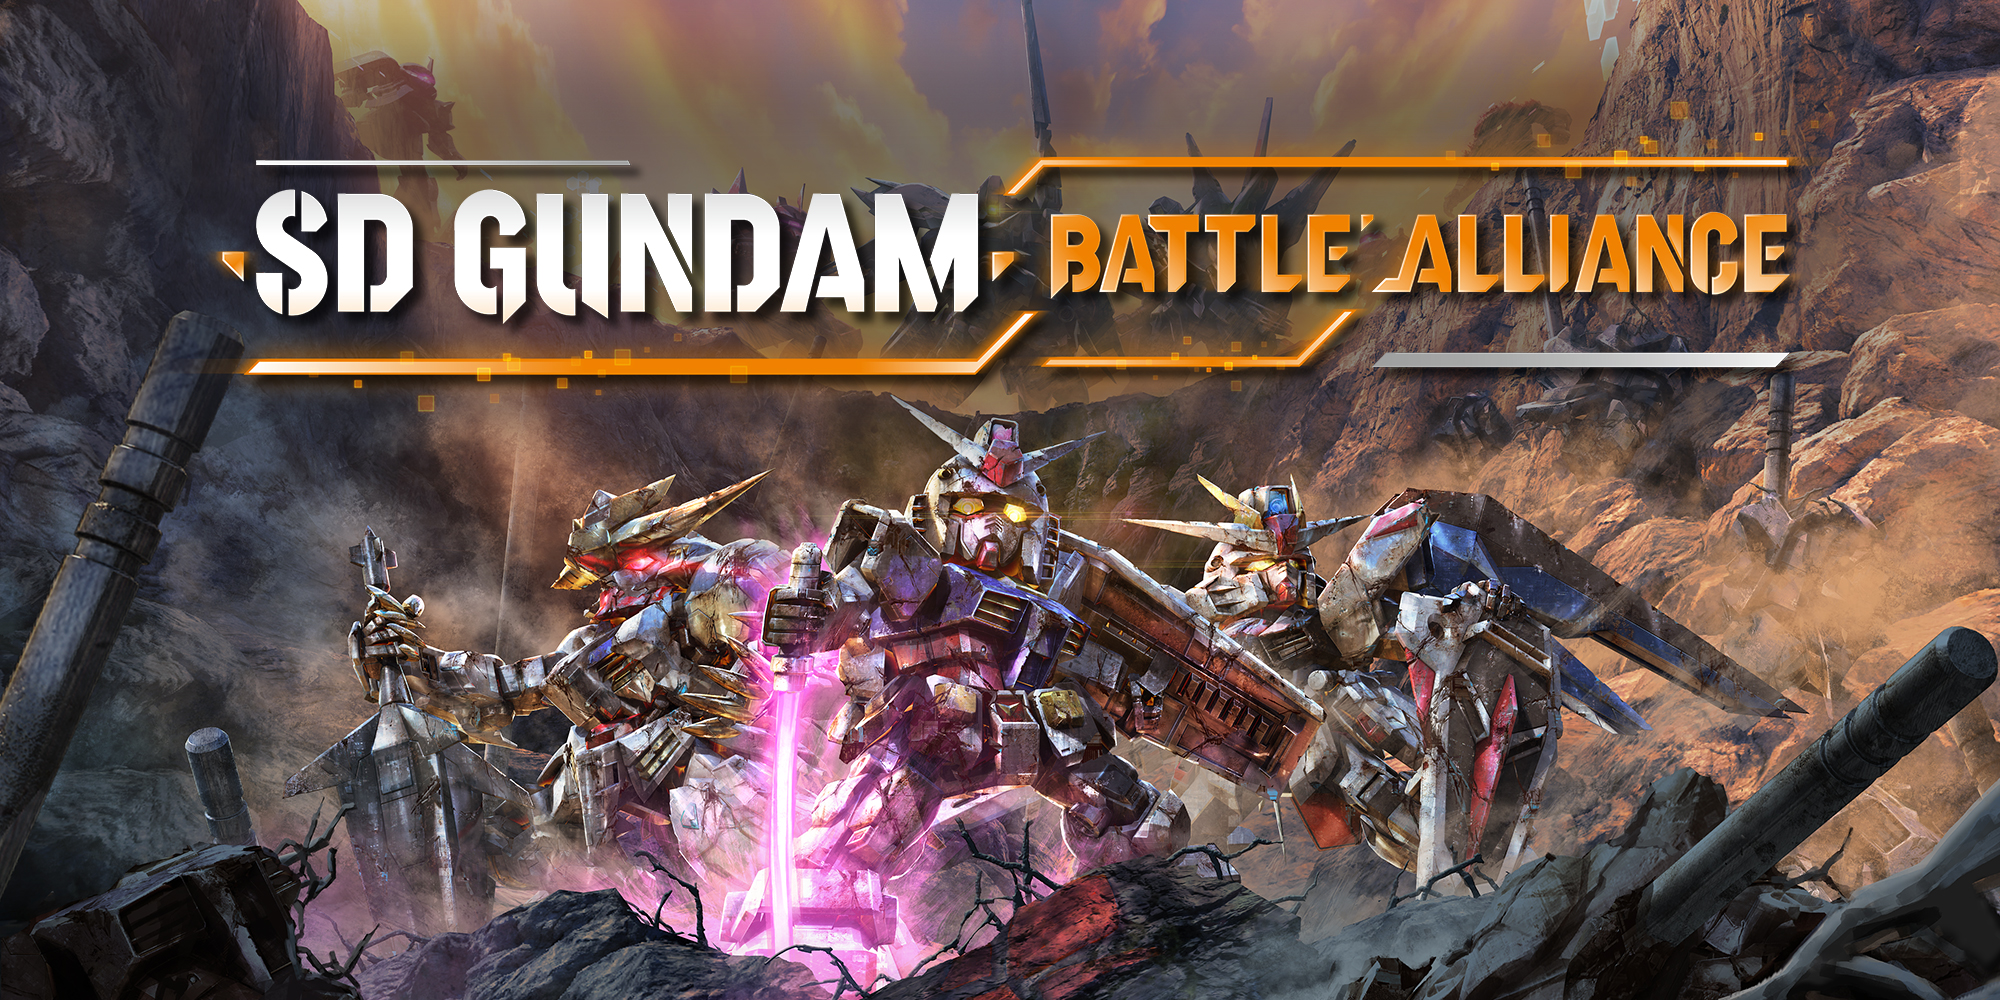 Alliance battle sd gundam SD Gundam